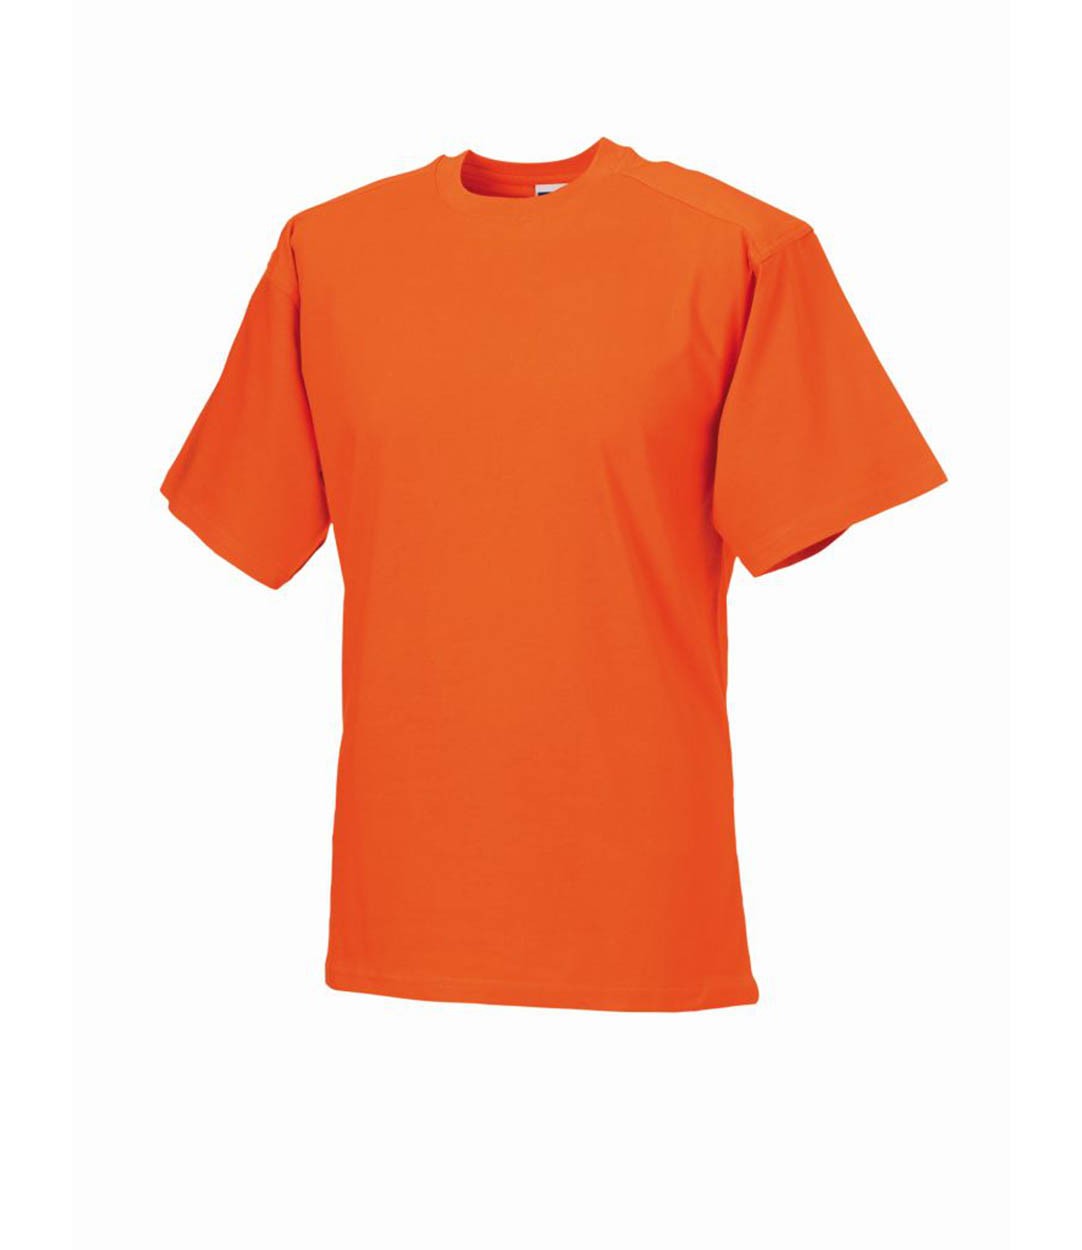 Russell 010M Workwear T-Shirt - Heavyweight T Shirts - Unisex / Men's T  Shirts - T Shirts - Leisurewear - Best Workwear